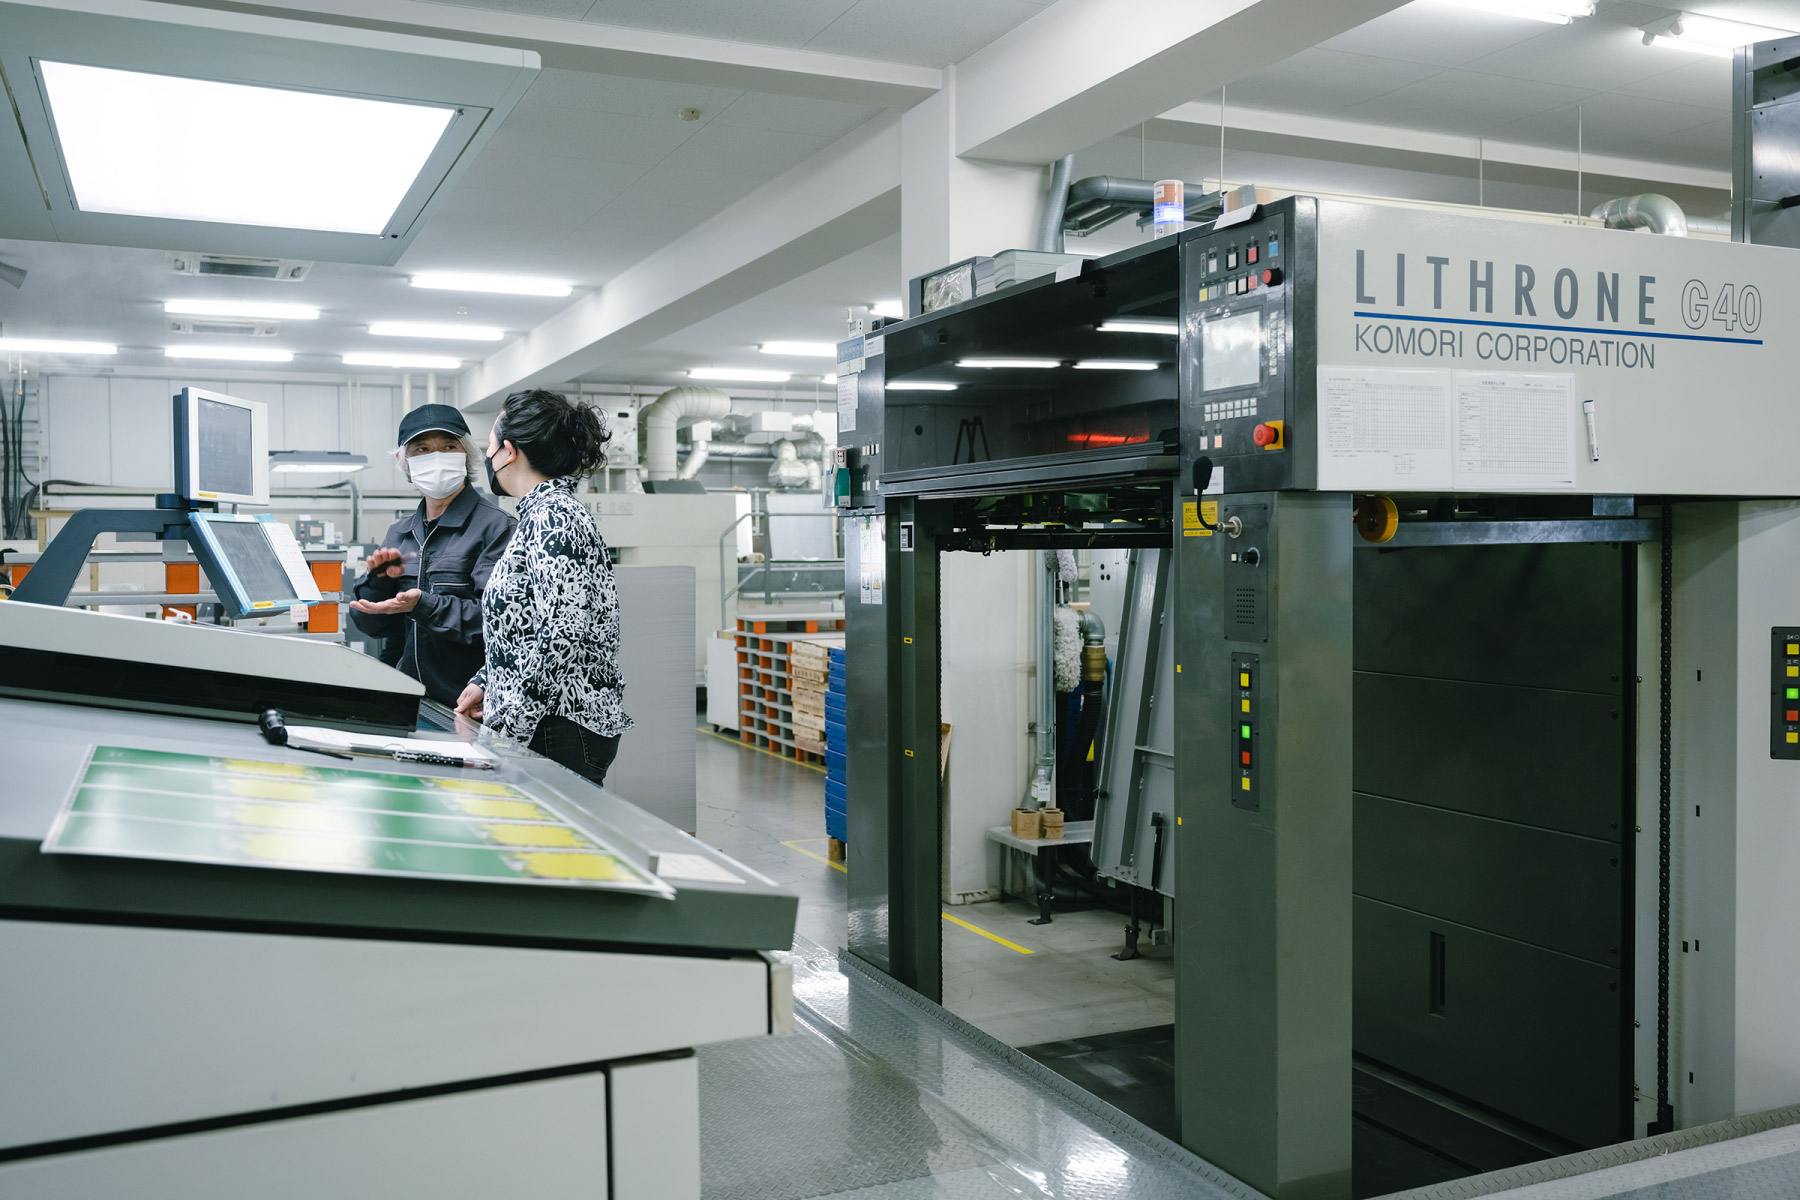 Clean printing factory